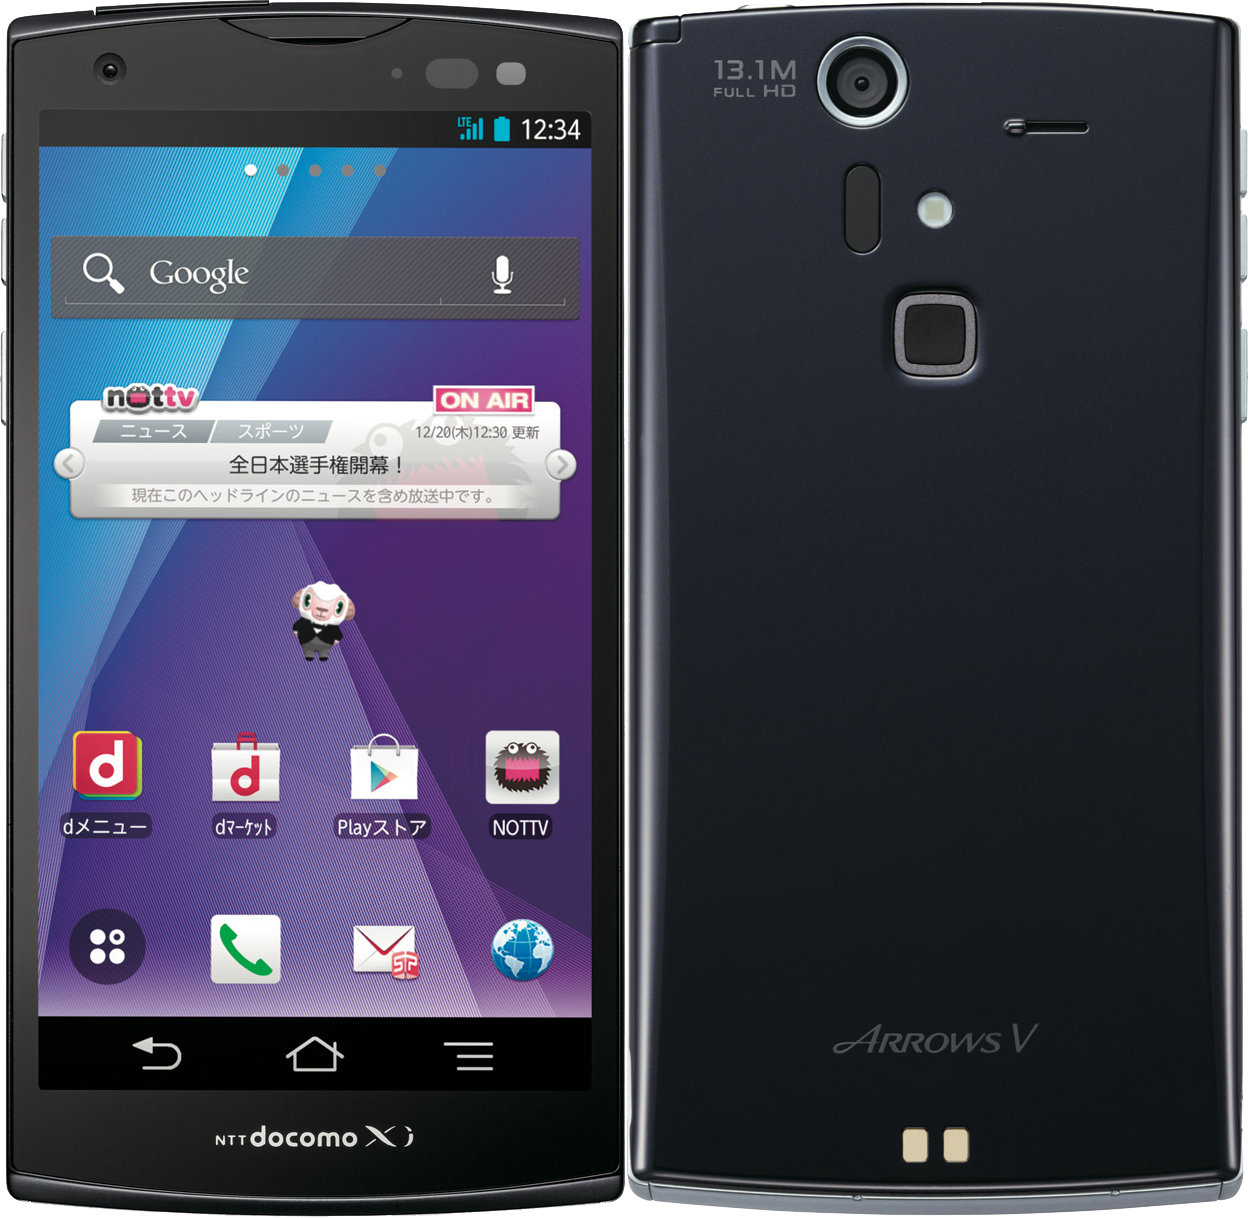 Kyoex - Shop Buy Docomo NEC N-02D Exmor Unlocked Japanese Flip Phone